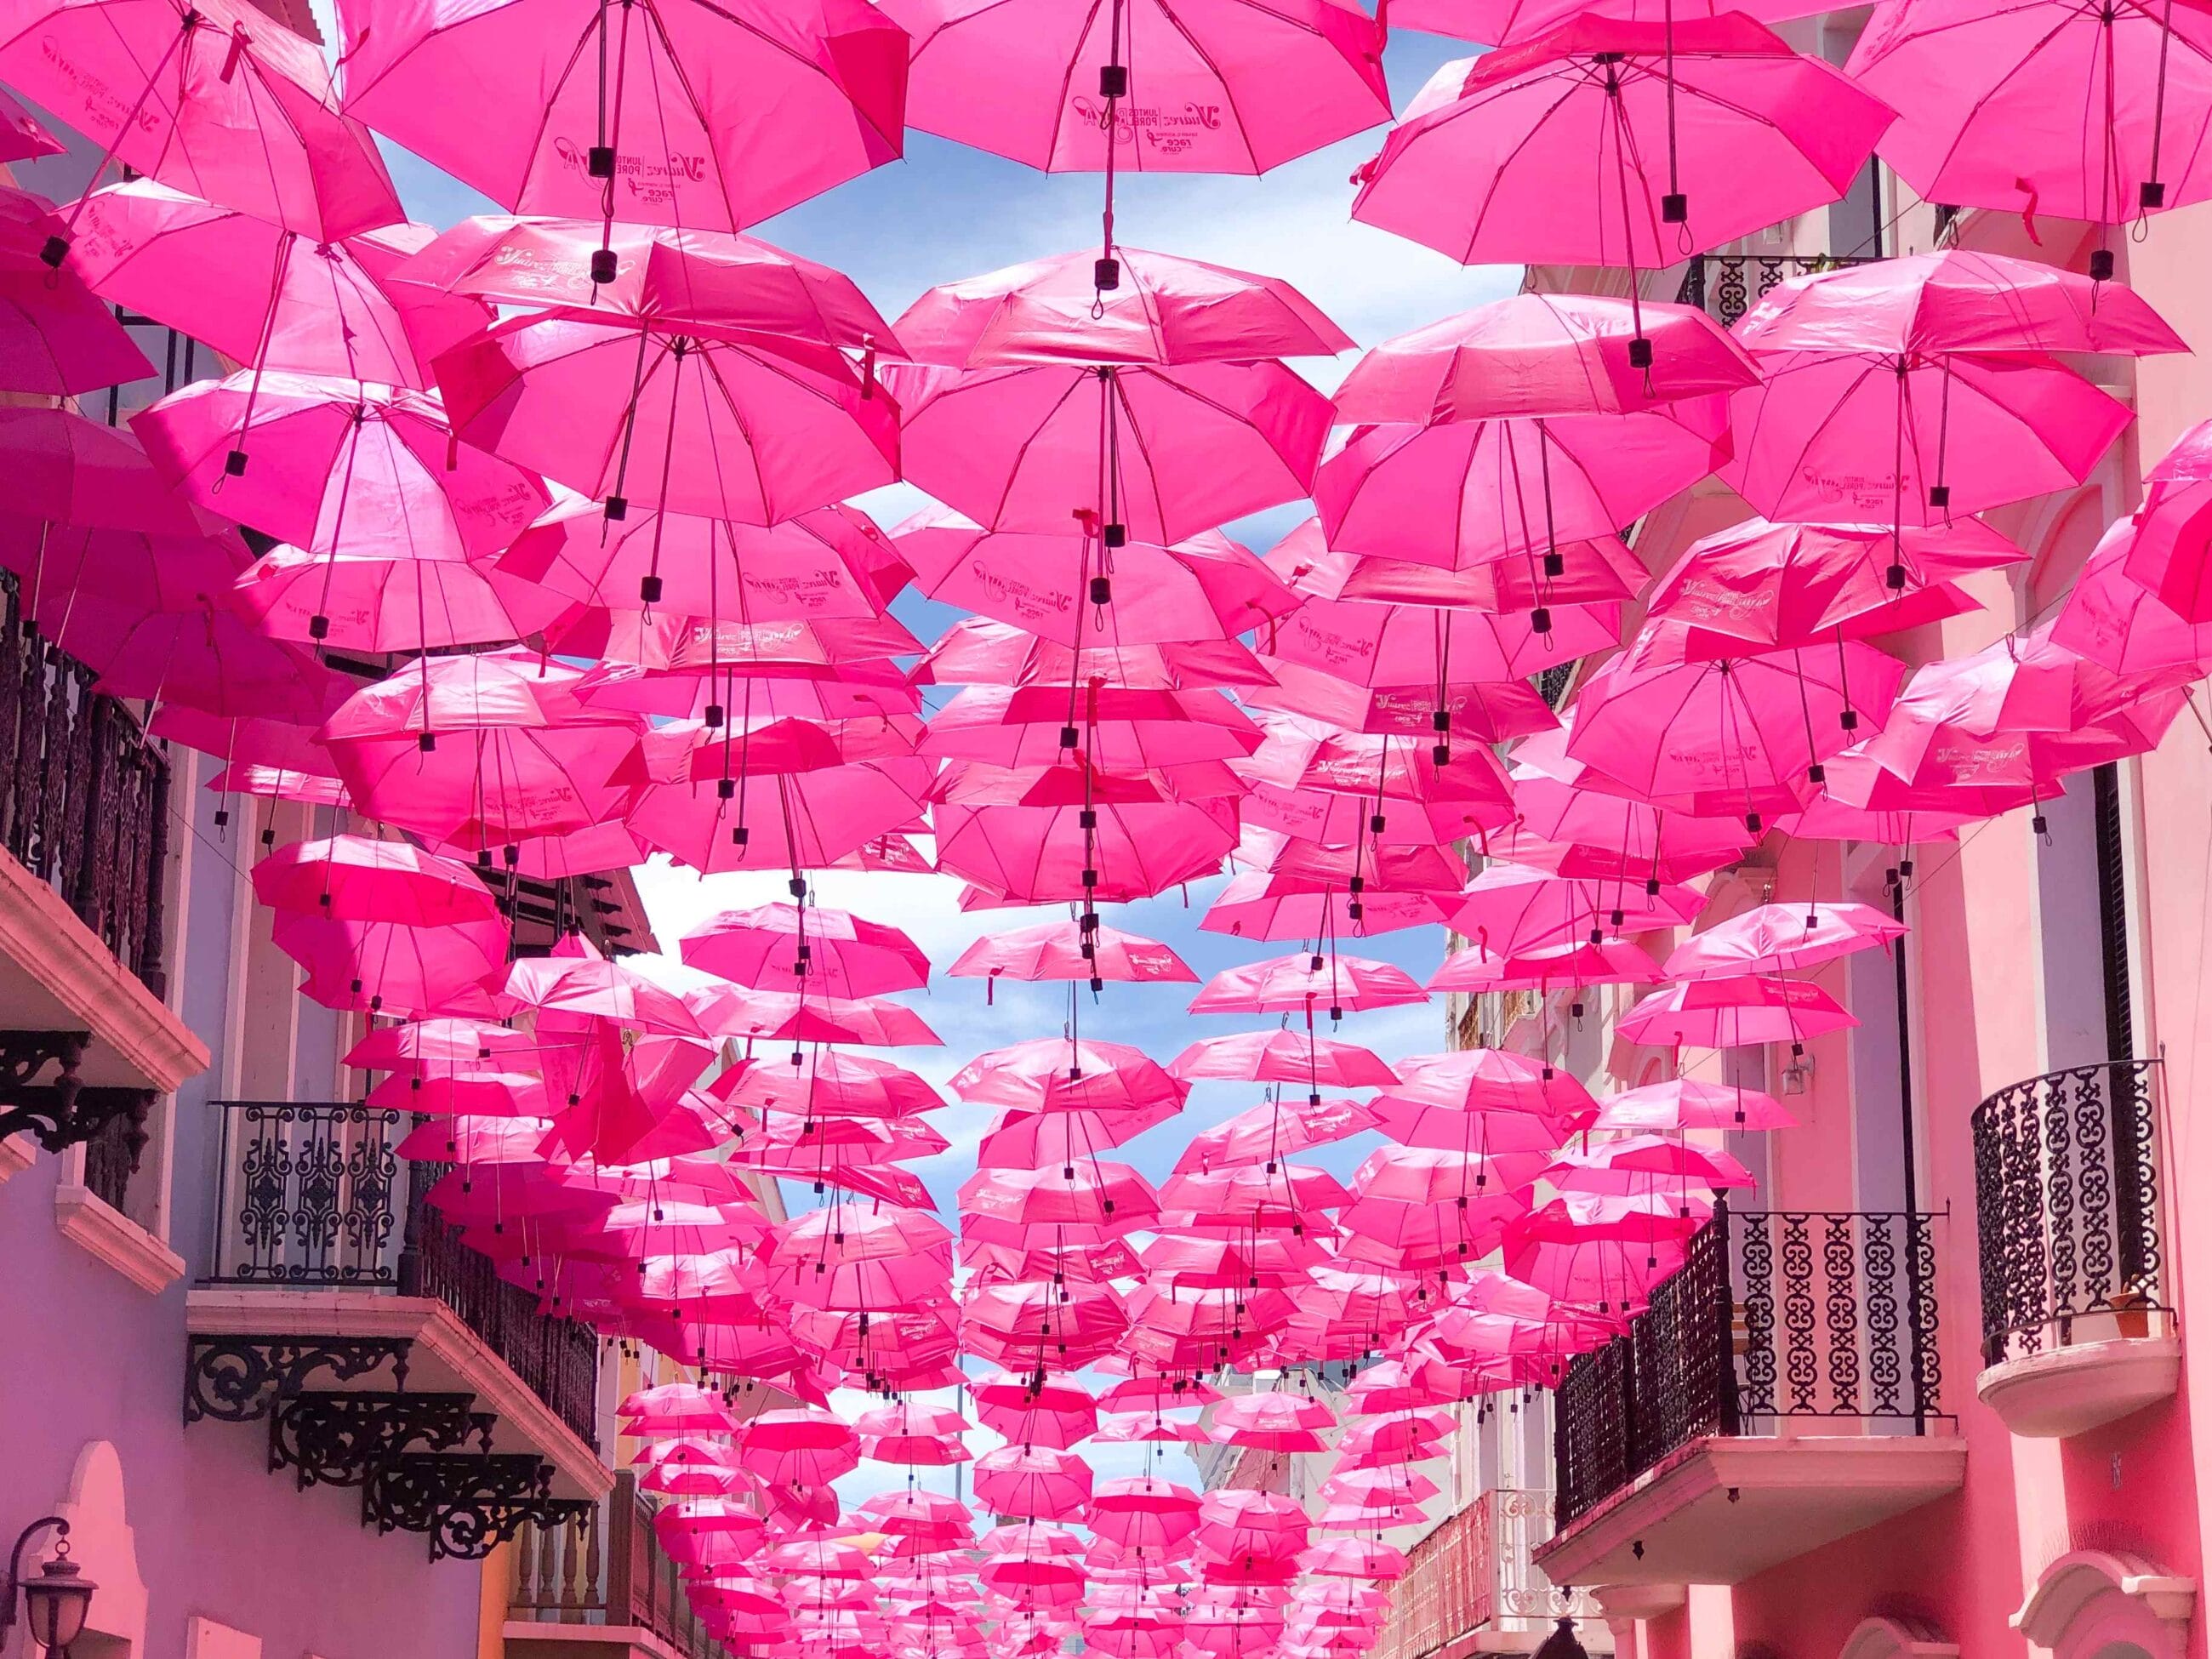 sbti paper science based targets blog umbrellas pink cority